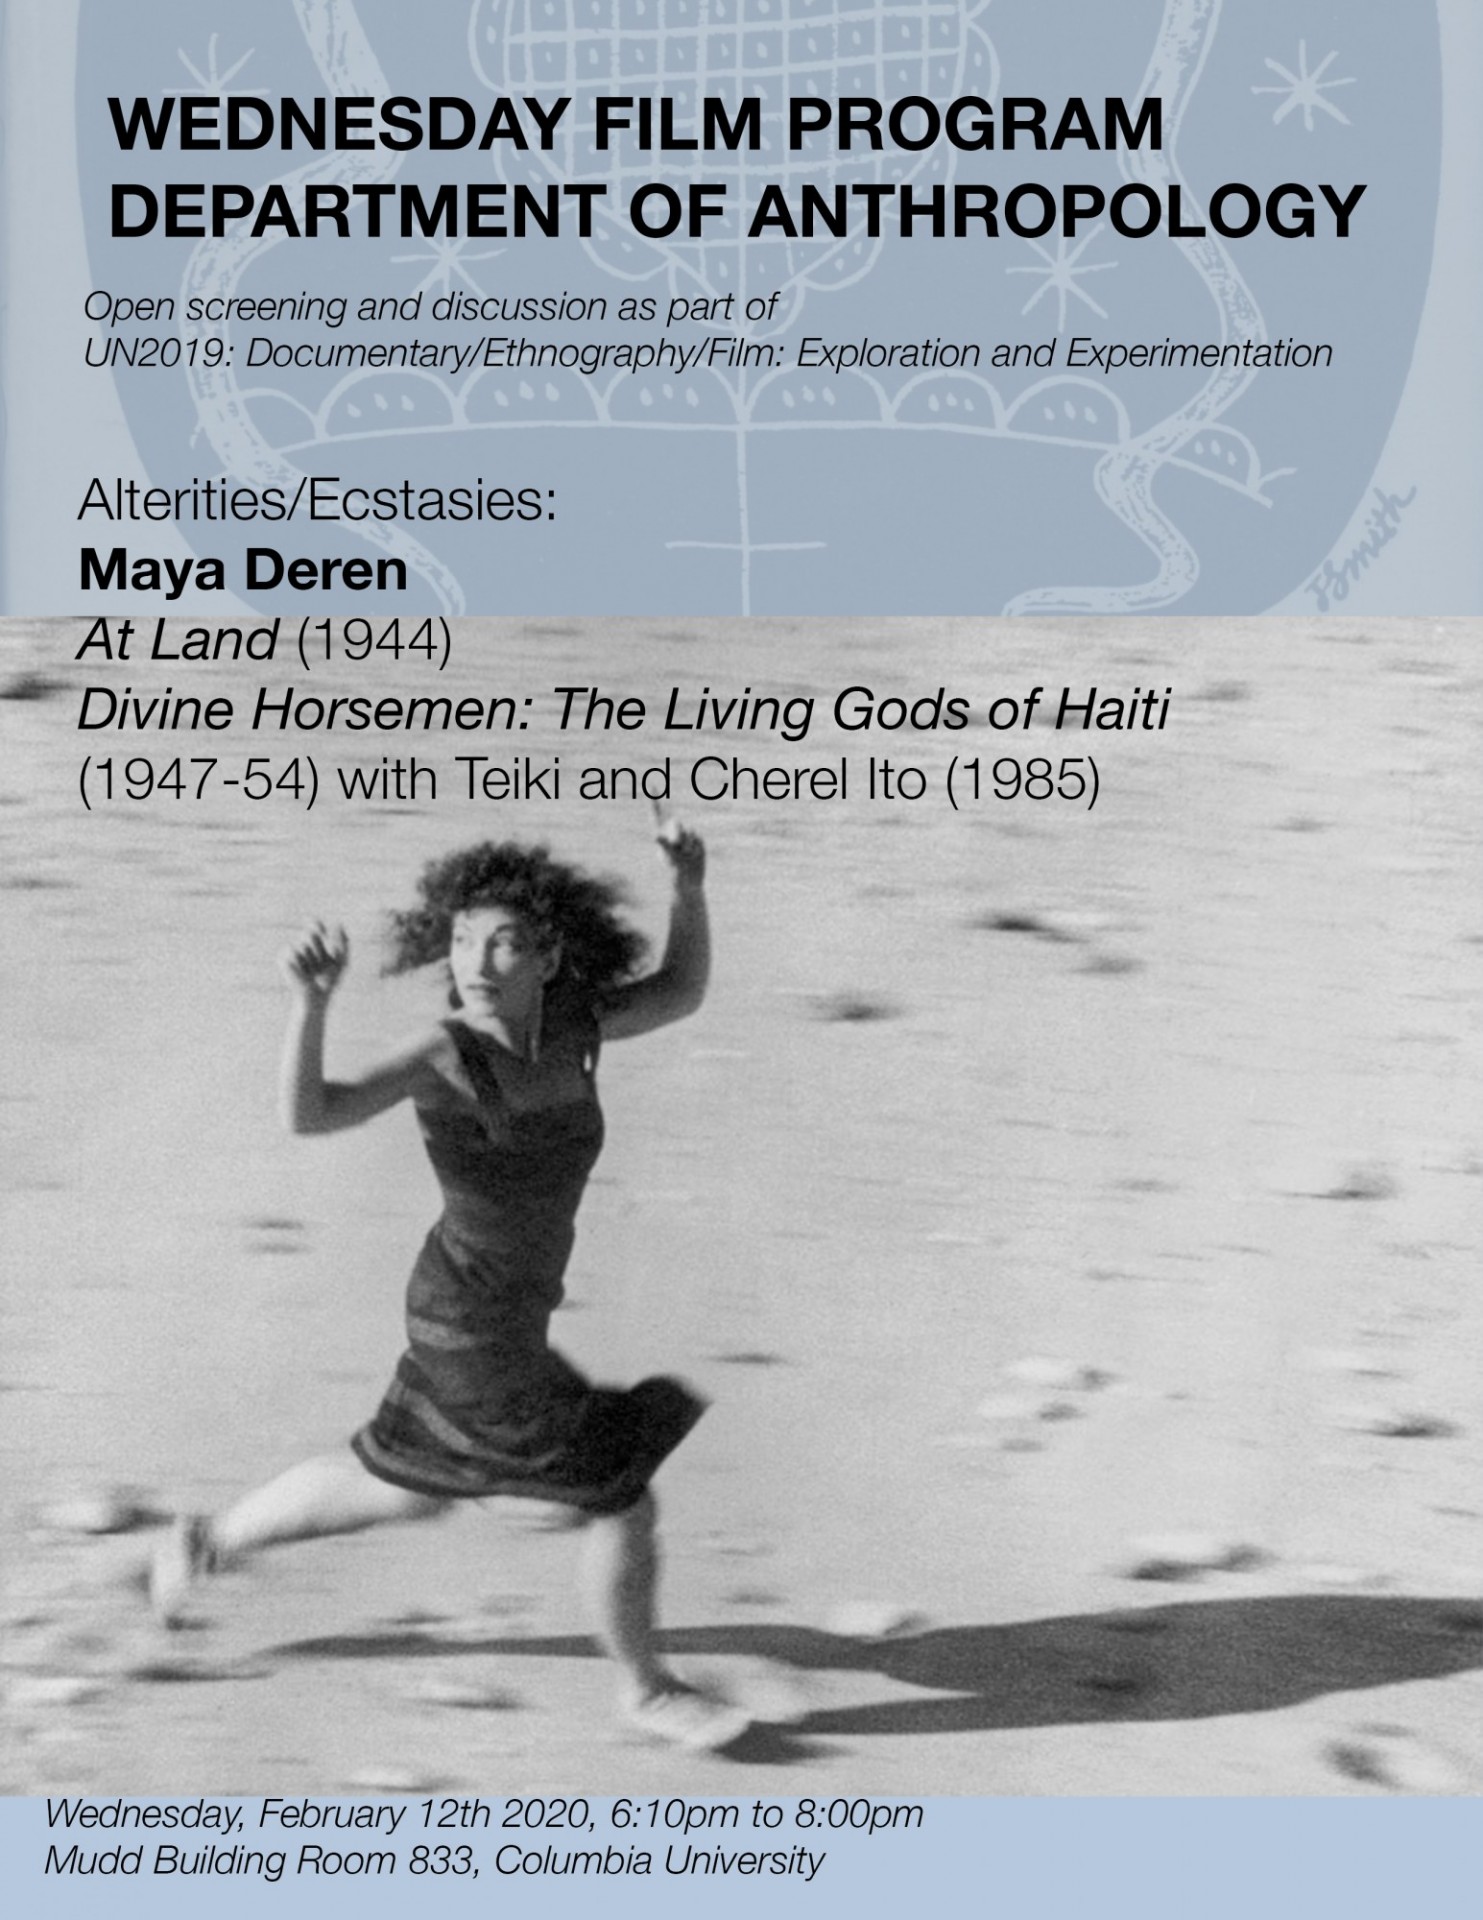 Maya Derin "At Land" and "Divine Horsemen: The Living Gods of Haiti" with Teiki and Cherel Ito